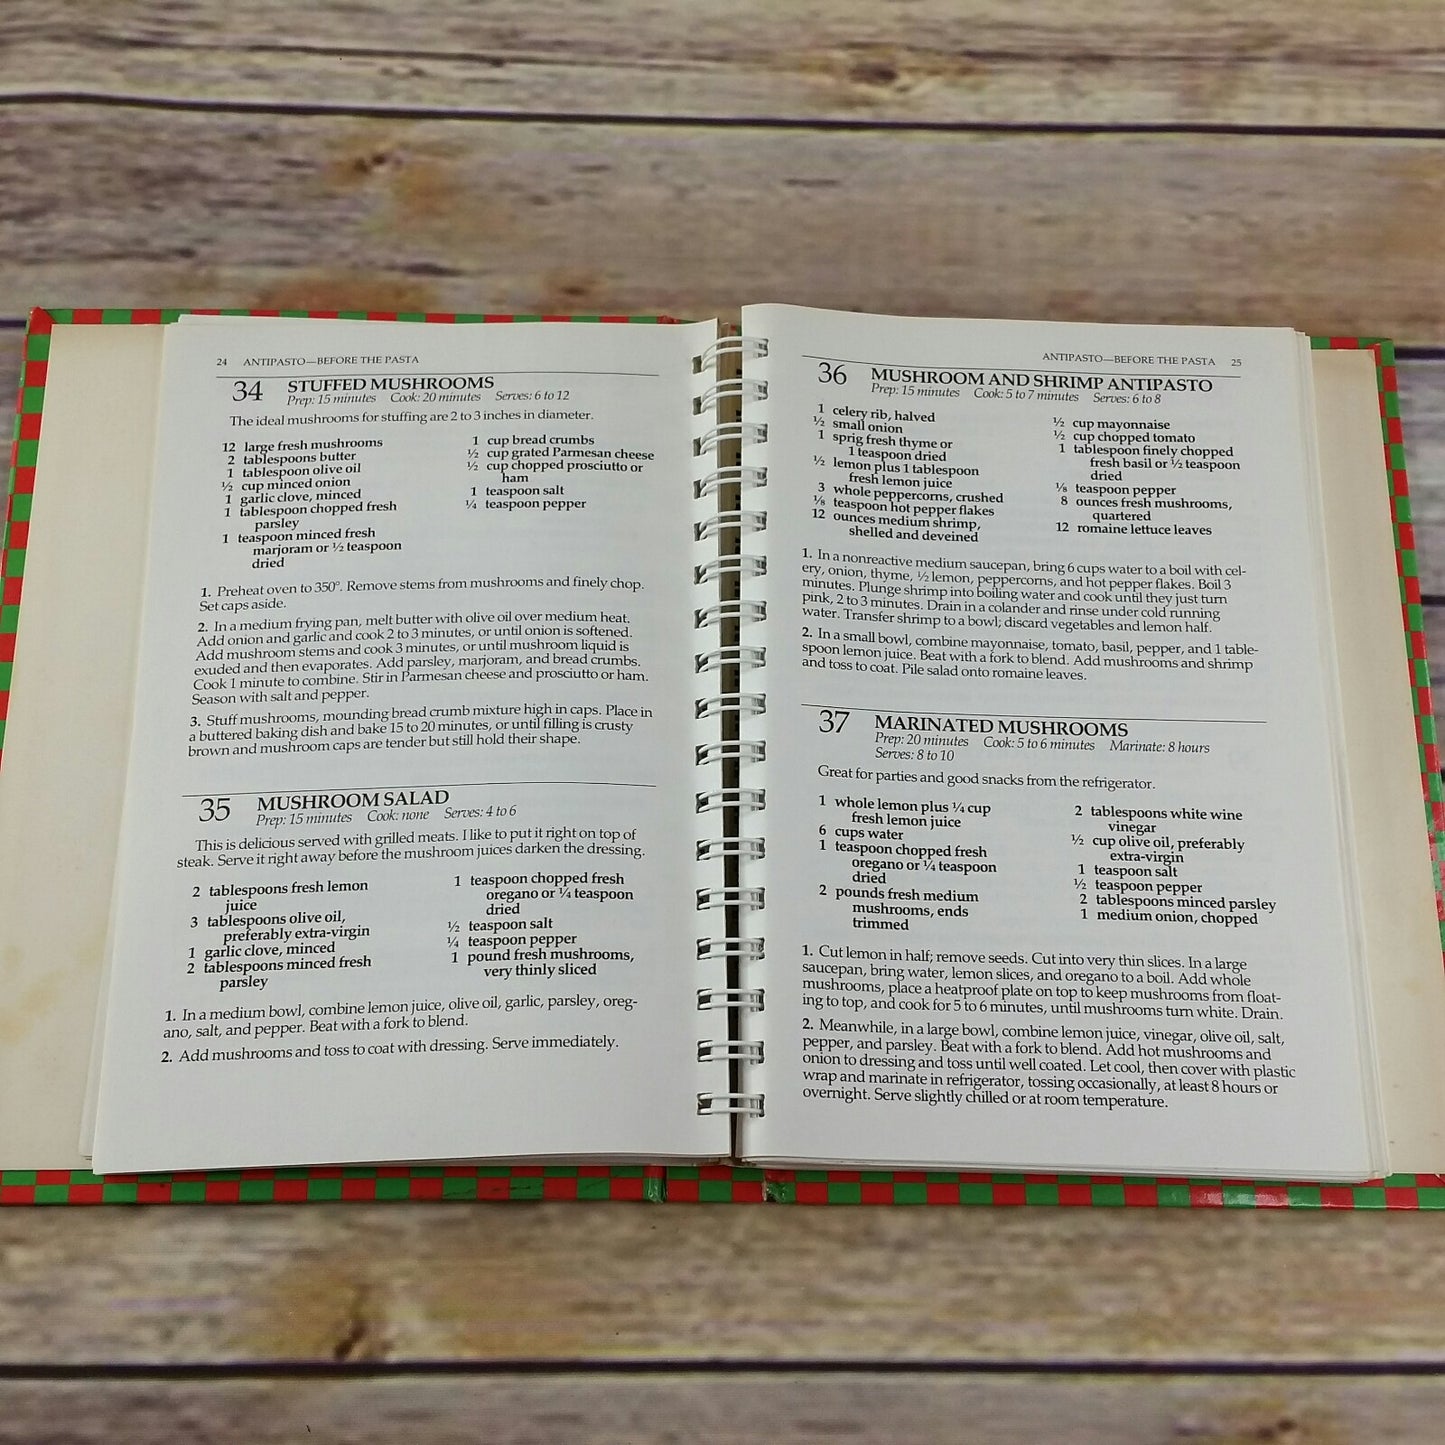 Vintage Italian Cookbook 365 Easy Italian Recipes 1991 Spiral Bound Hardcover Rick Marzullo O'Connell - At Grandma's Table